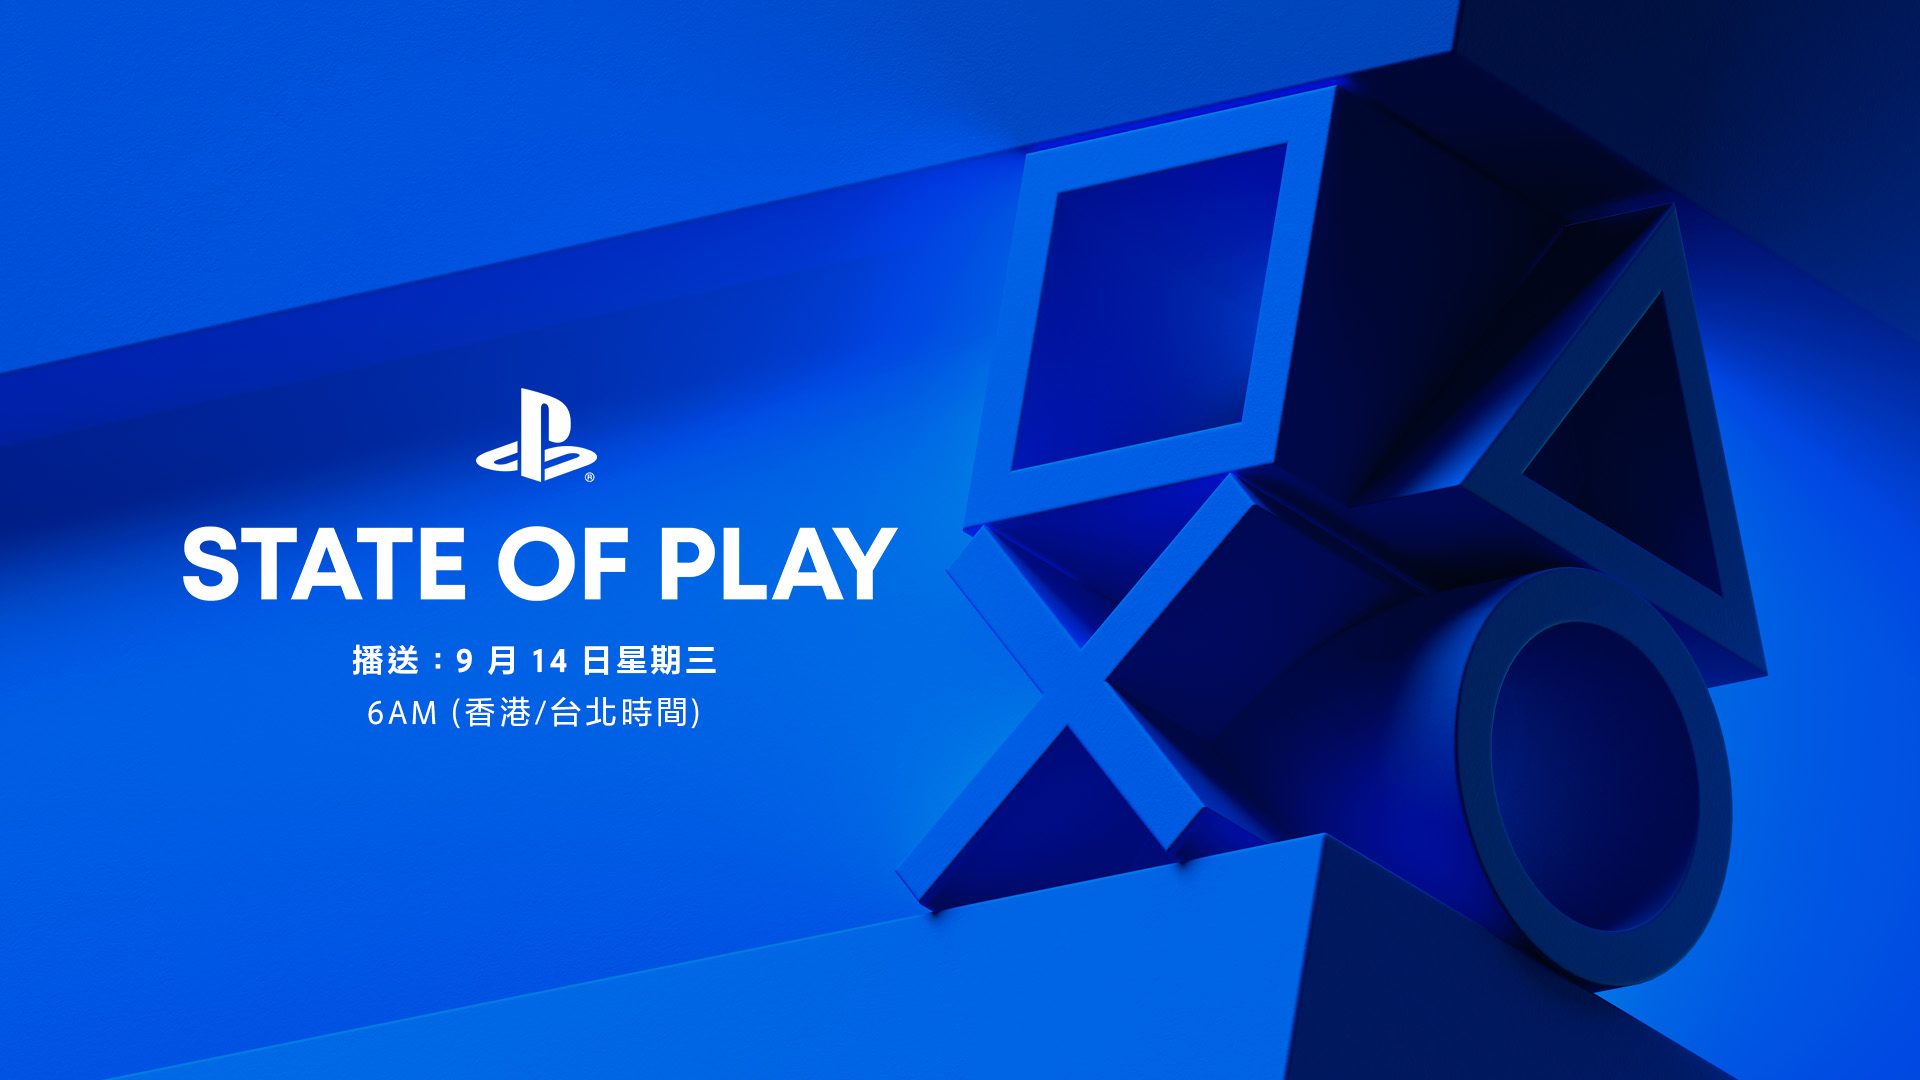 State of Play將在明天9月14日回歸– PlayStation.Blog 繁體中文